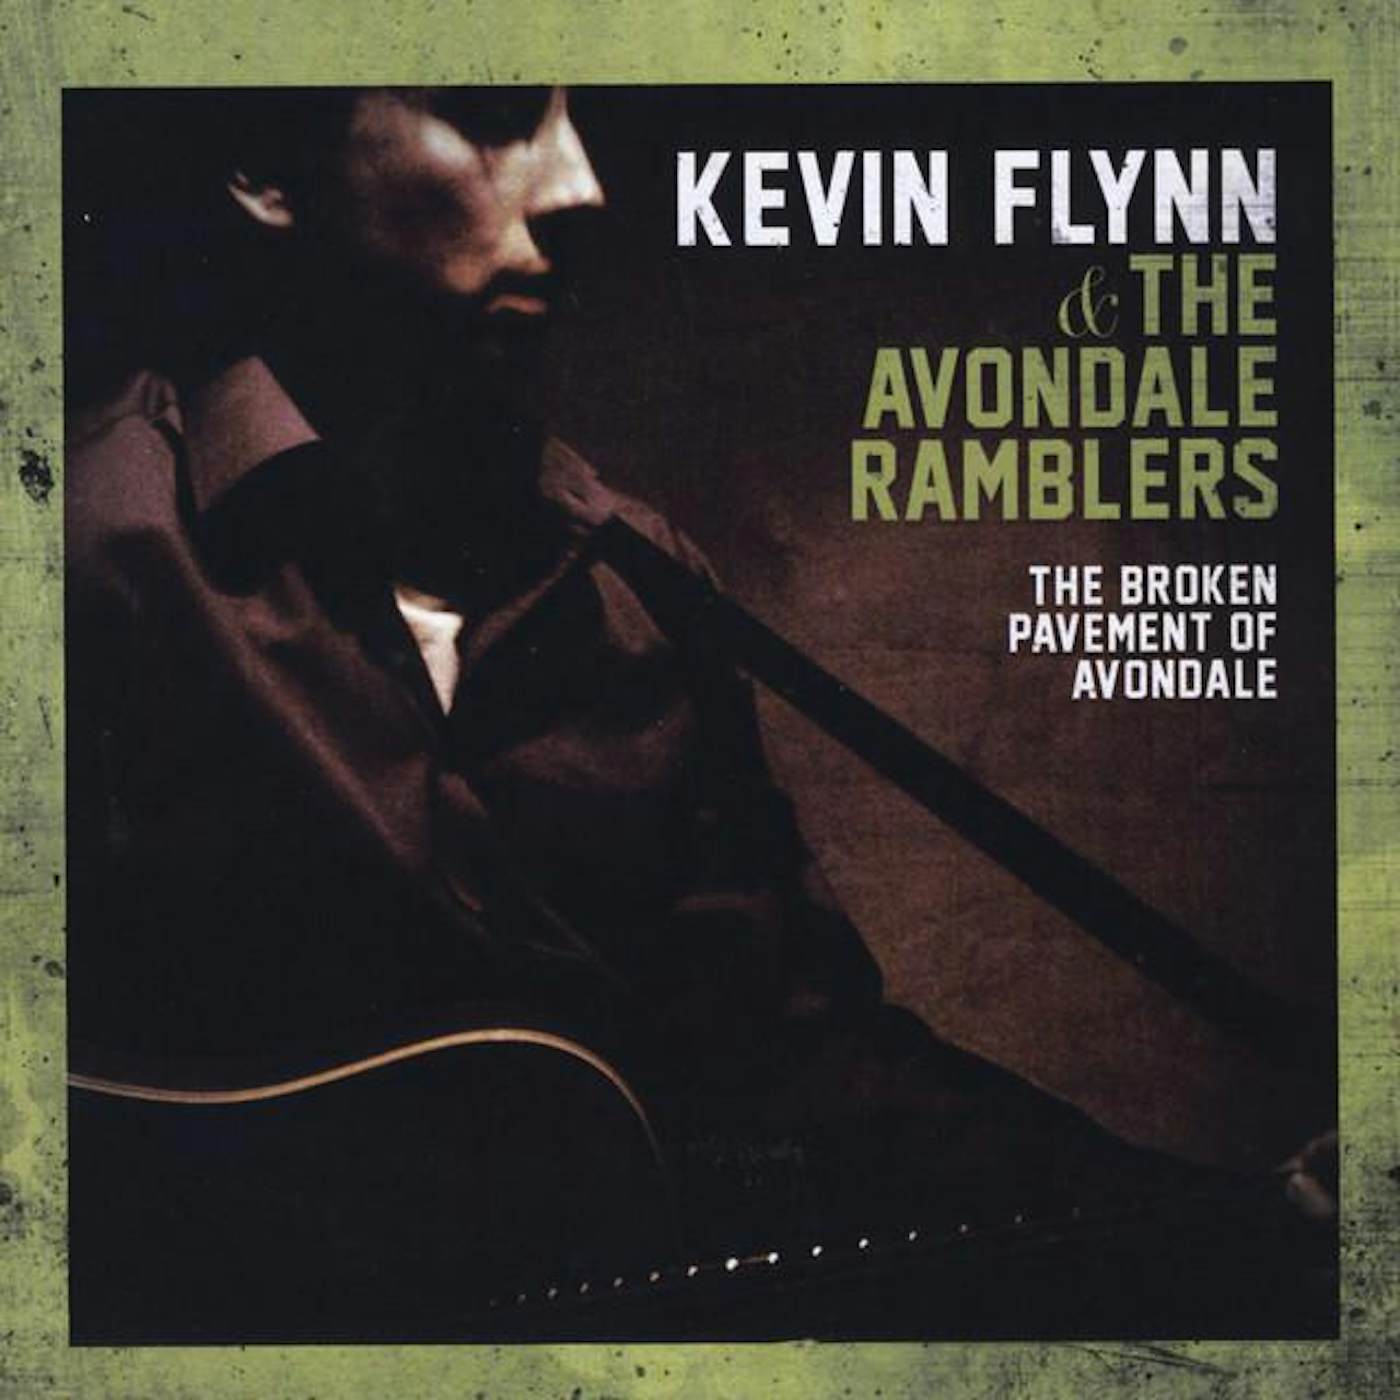 Kevin Flynn & the Avondale Ramblers